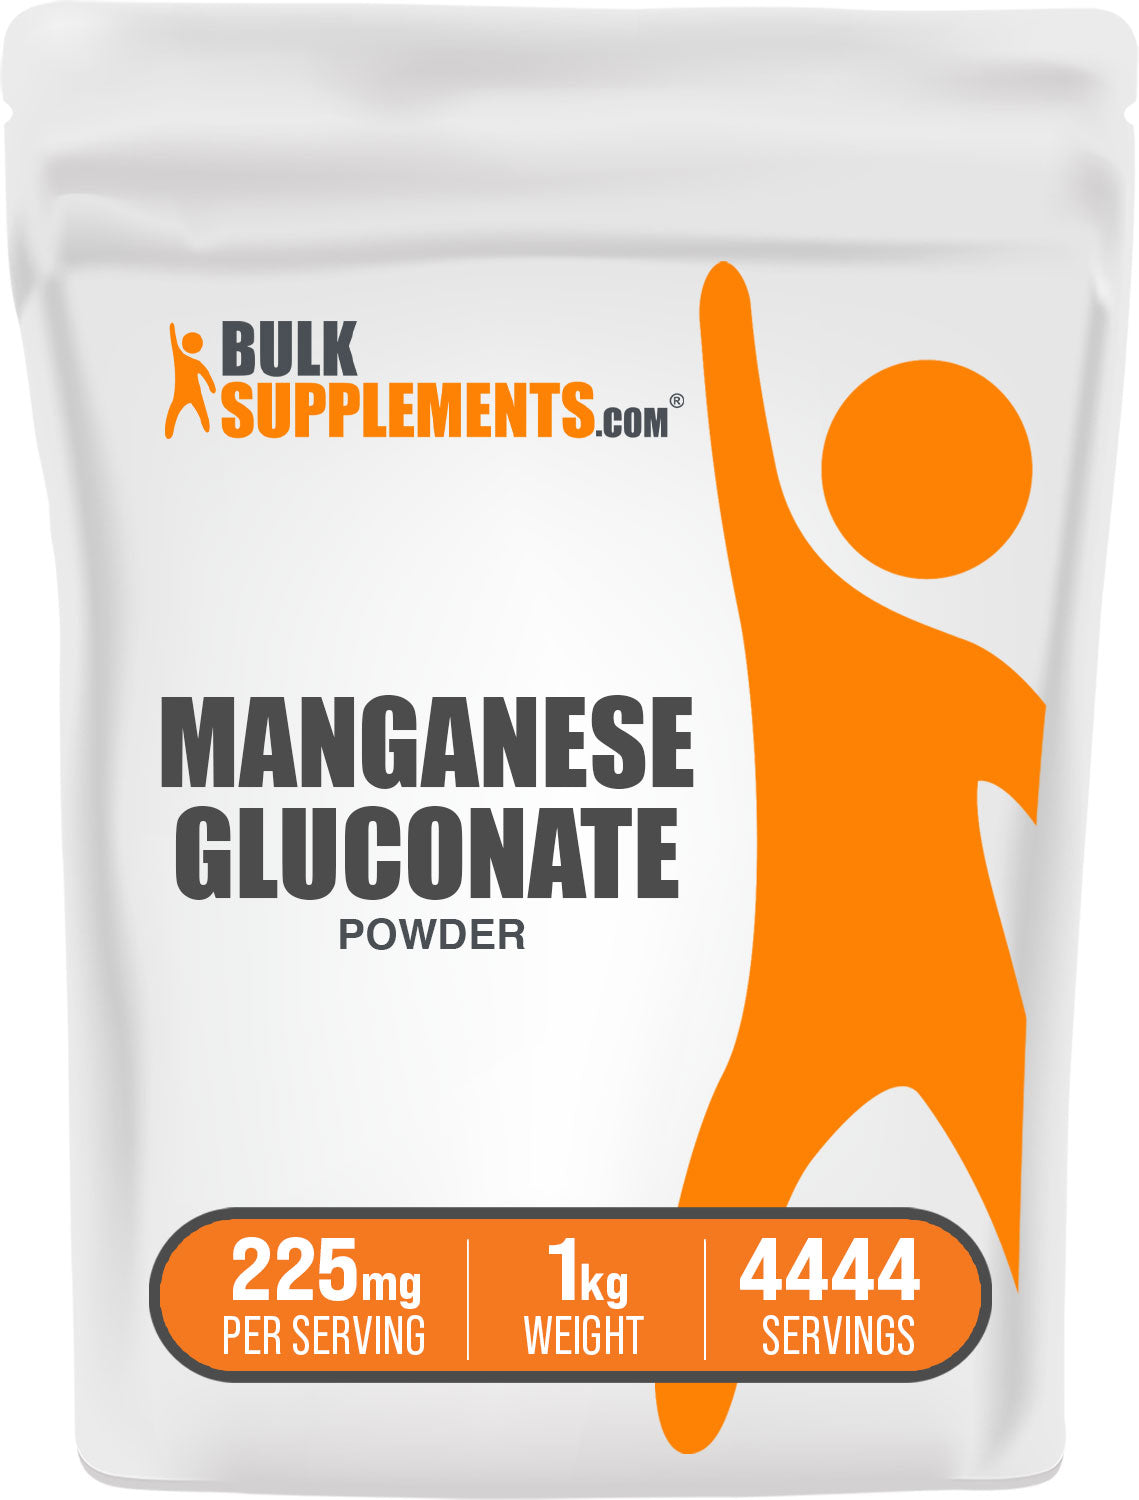 BulkSupplements Manganese Gluconate Powder 1kg bag